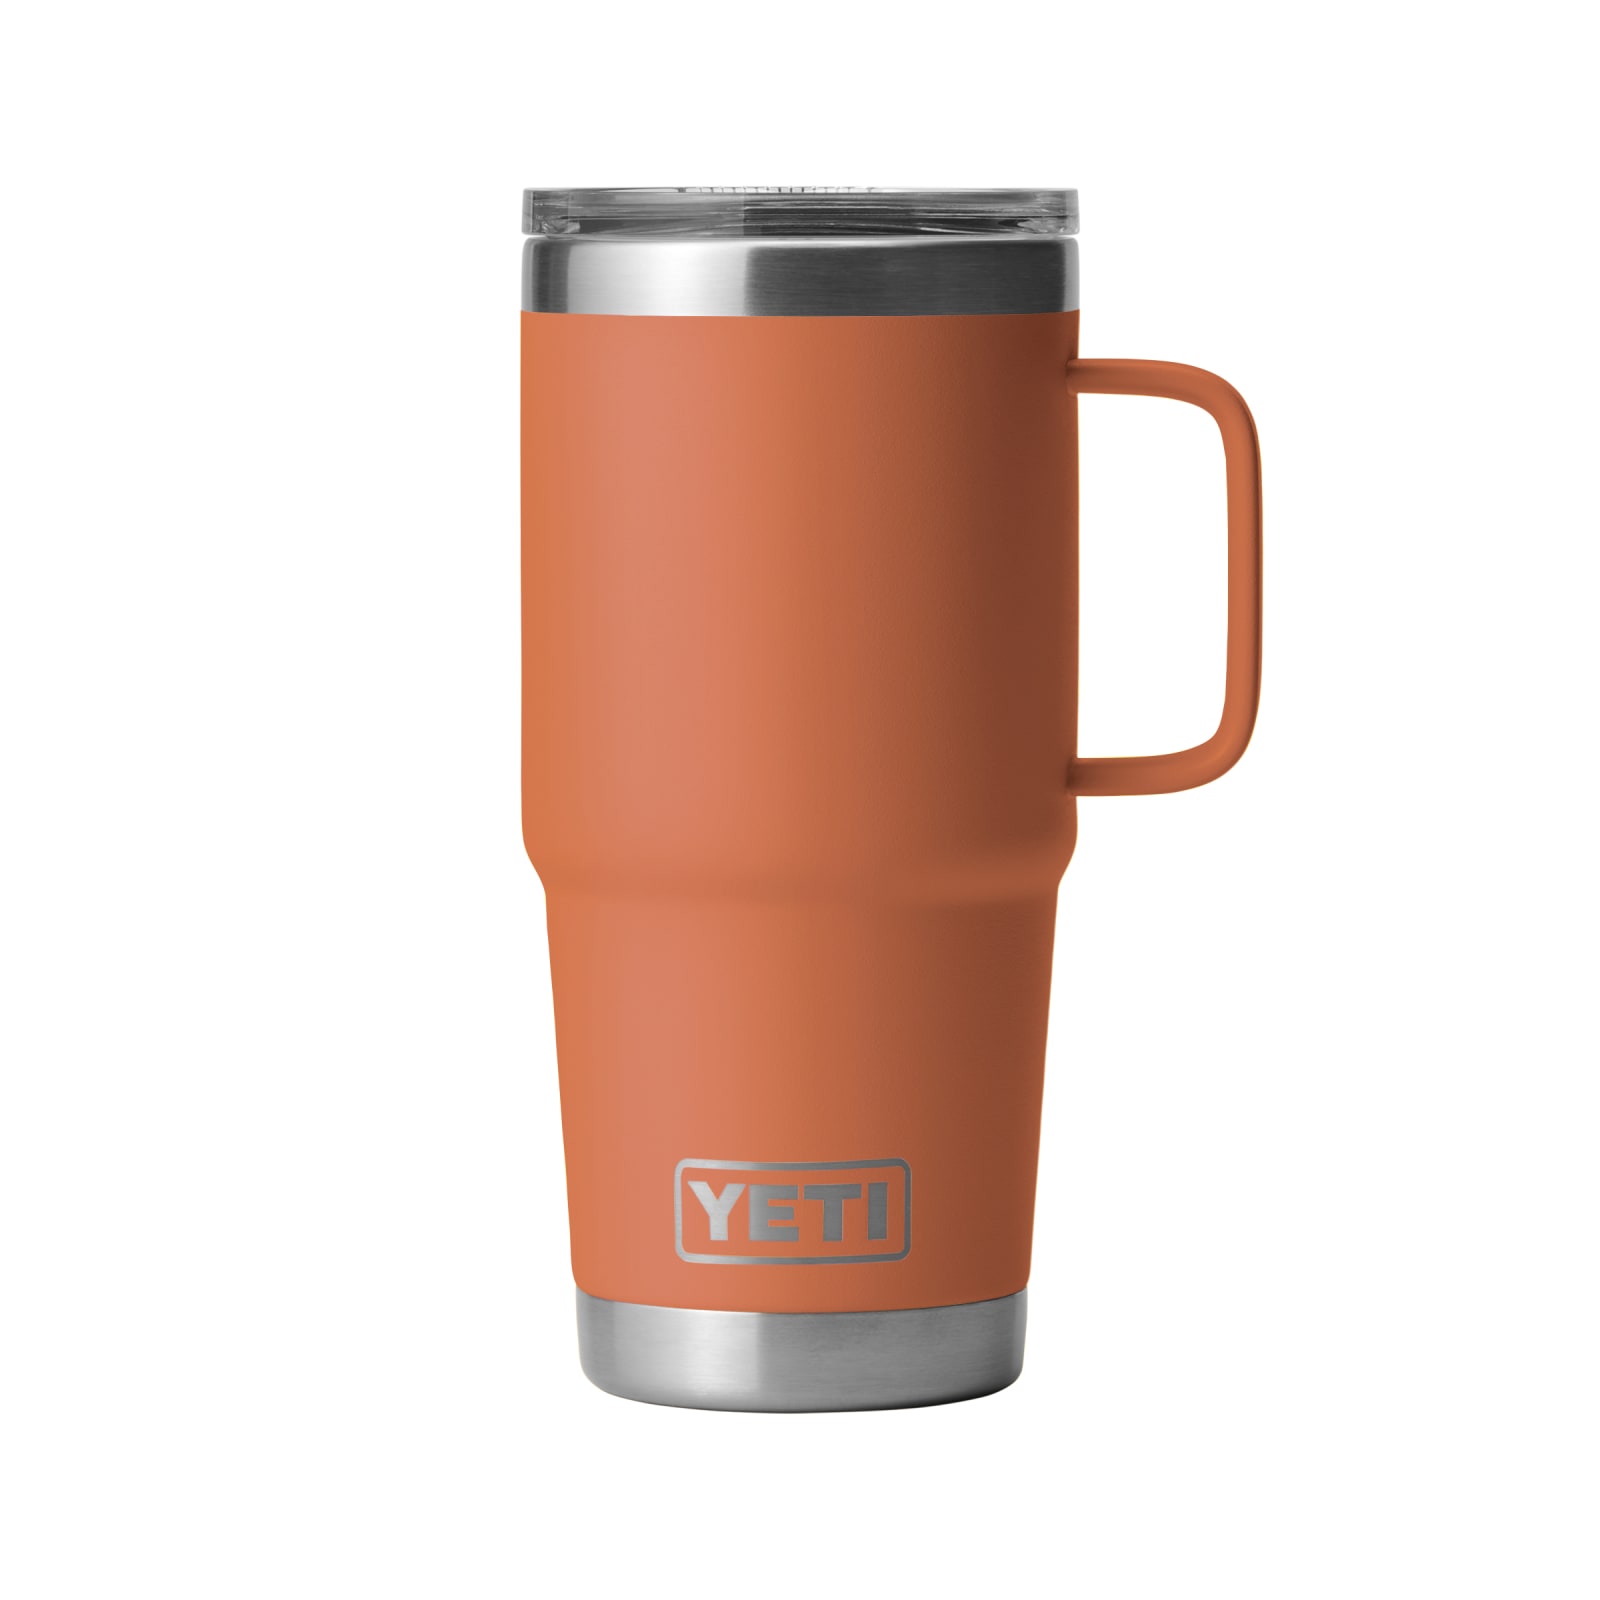 Yeti Rambler Tumbler Review - Is it the Best Yeti Coffee Travel Mug?, MagSlider Lid